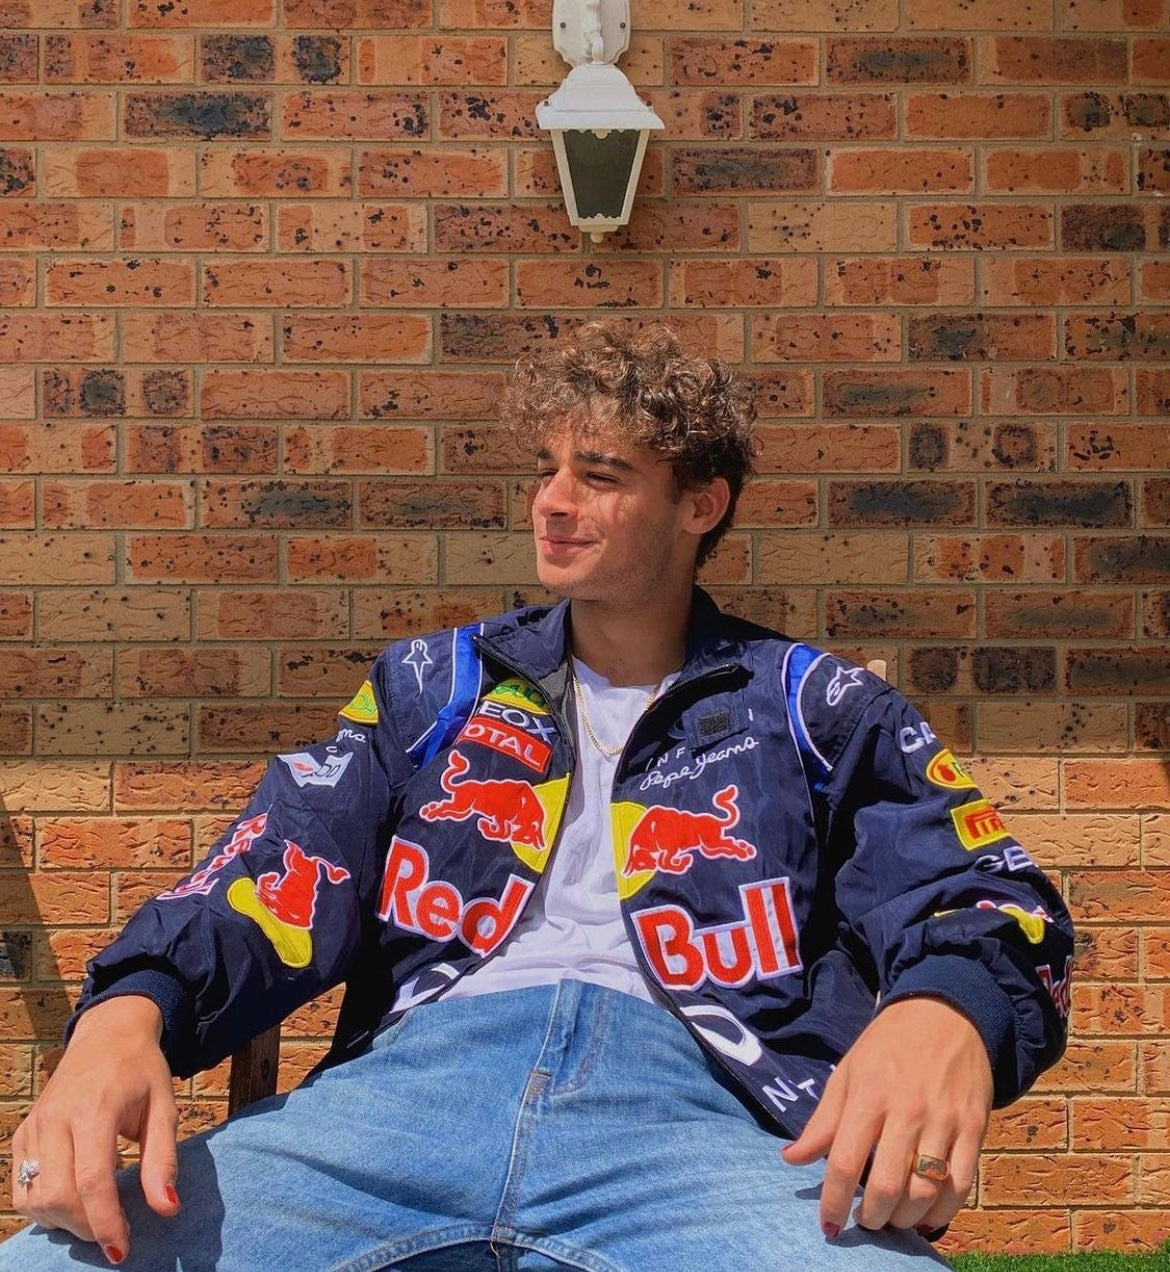 Vintage Race Jackets |Red Bull Vintage Racing Jacket| RetroRacingMerch